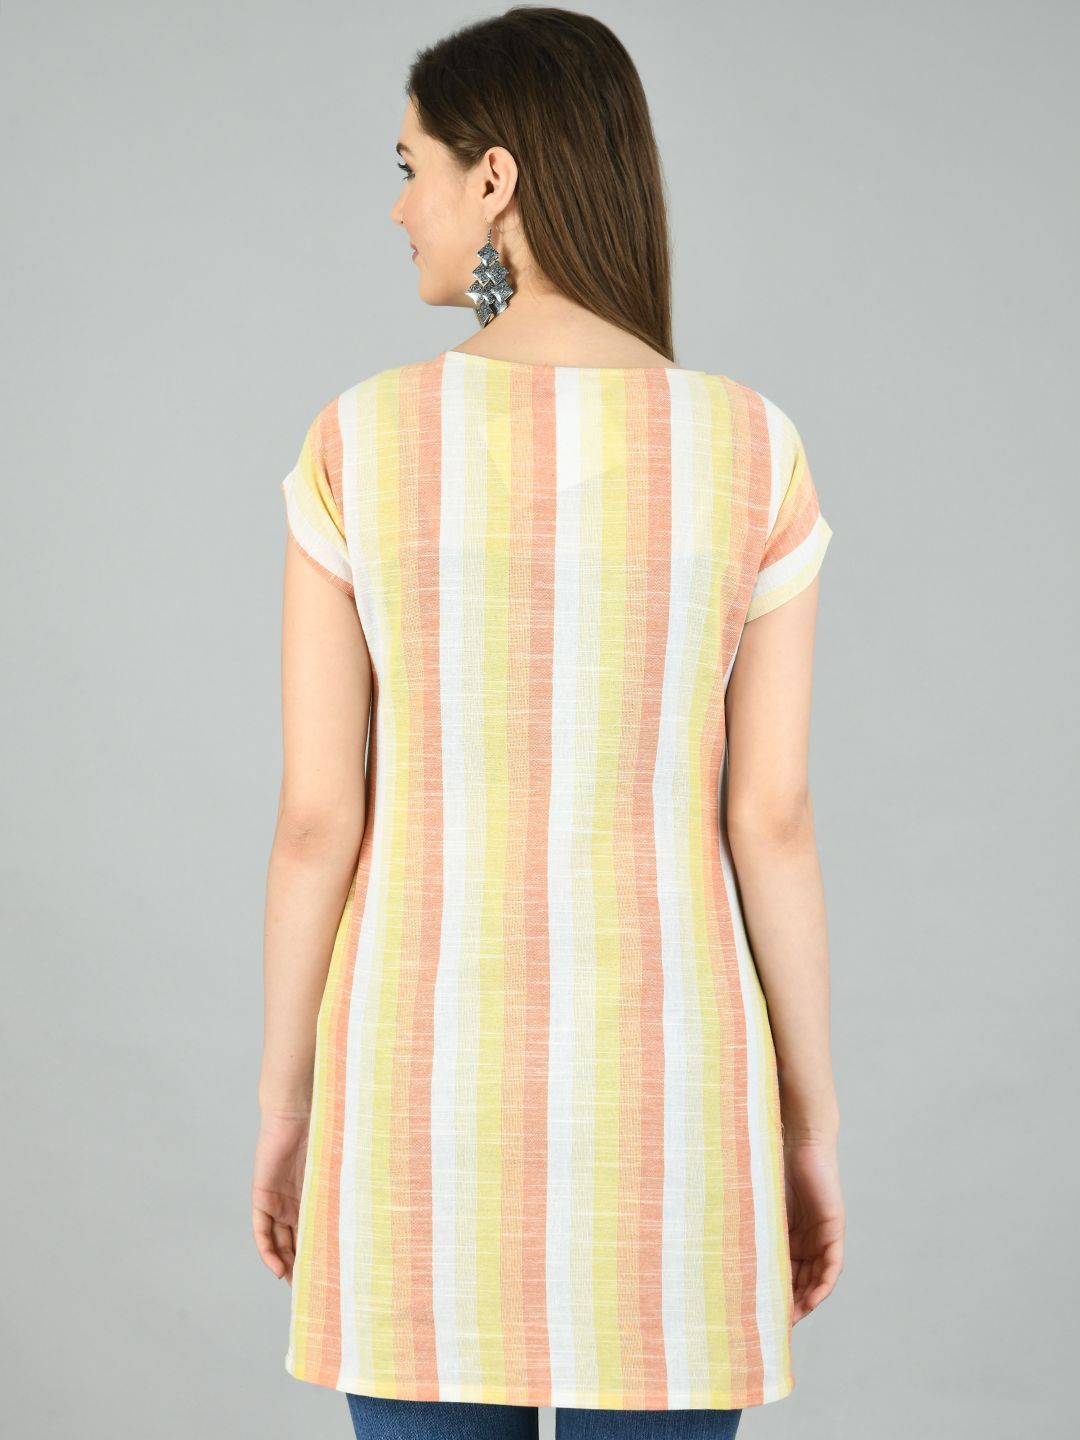 Women's Multi Cotton Printed Short Sleeve Round Neck Casual Top - Myshka